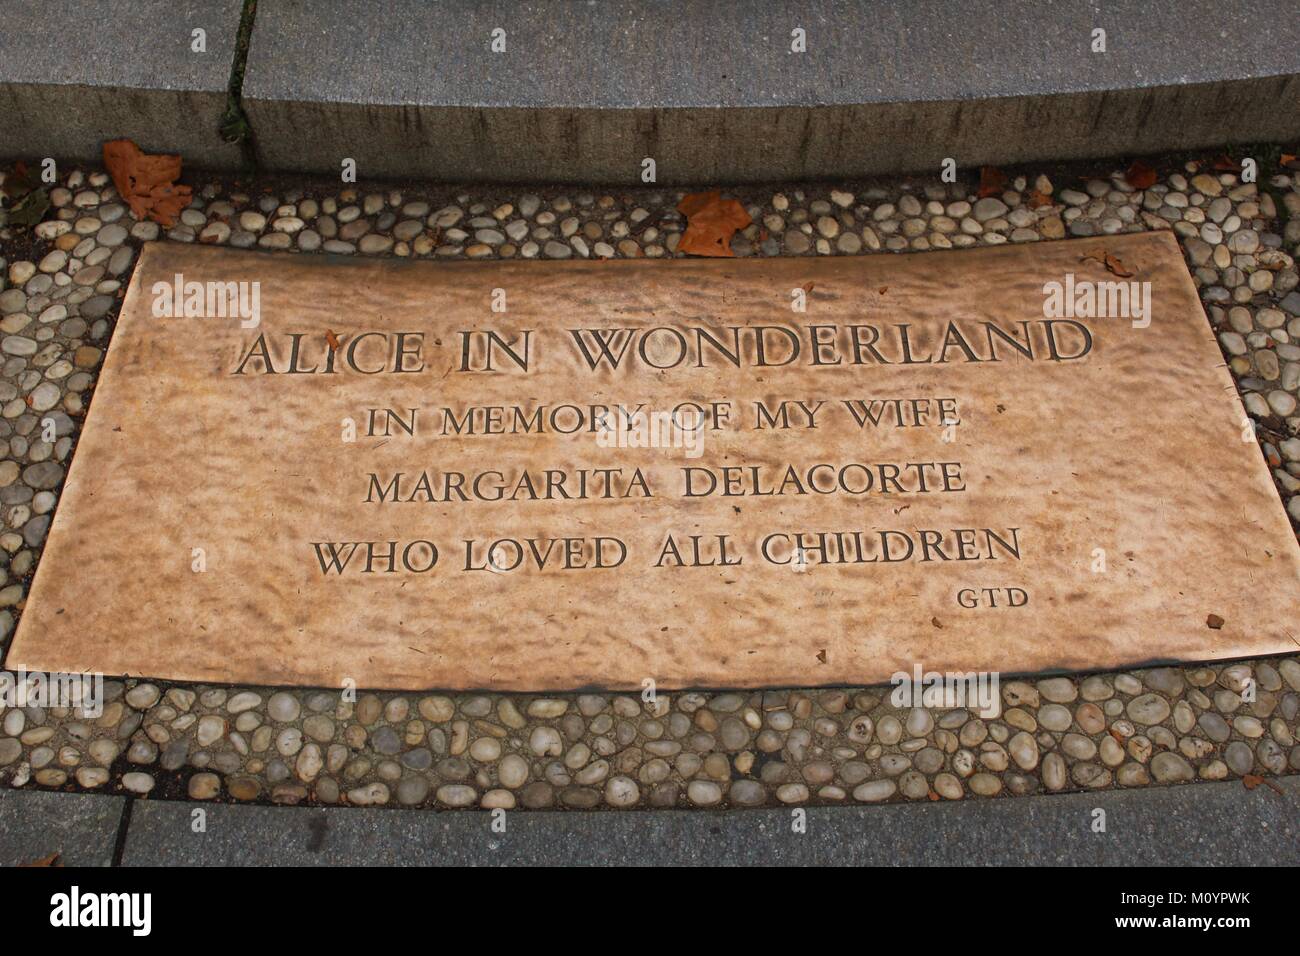 Alice in Wonderland memorial plaque for Margarita Delacorte- November 15, 2017- Bethesda Park, New York City. Stock Photo